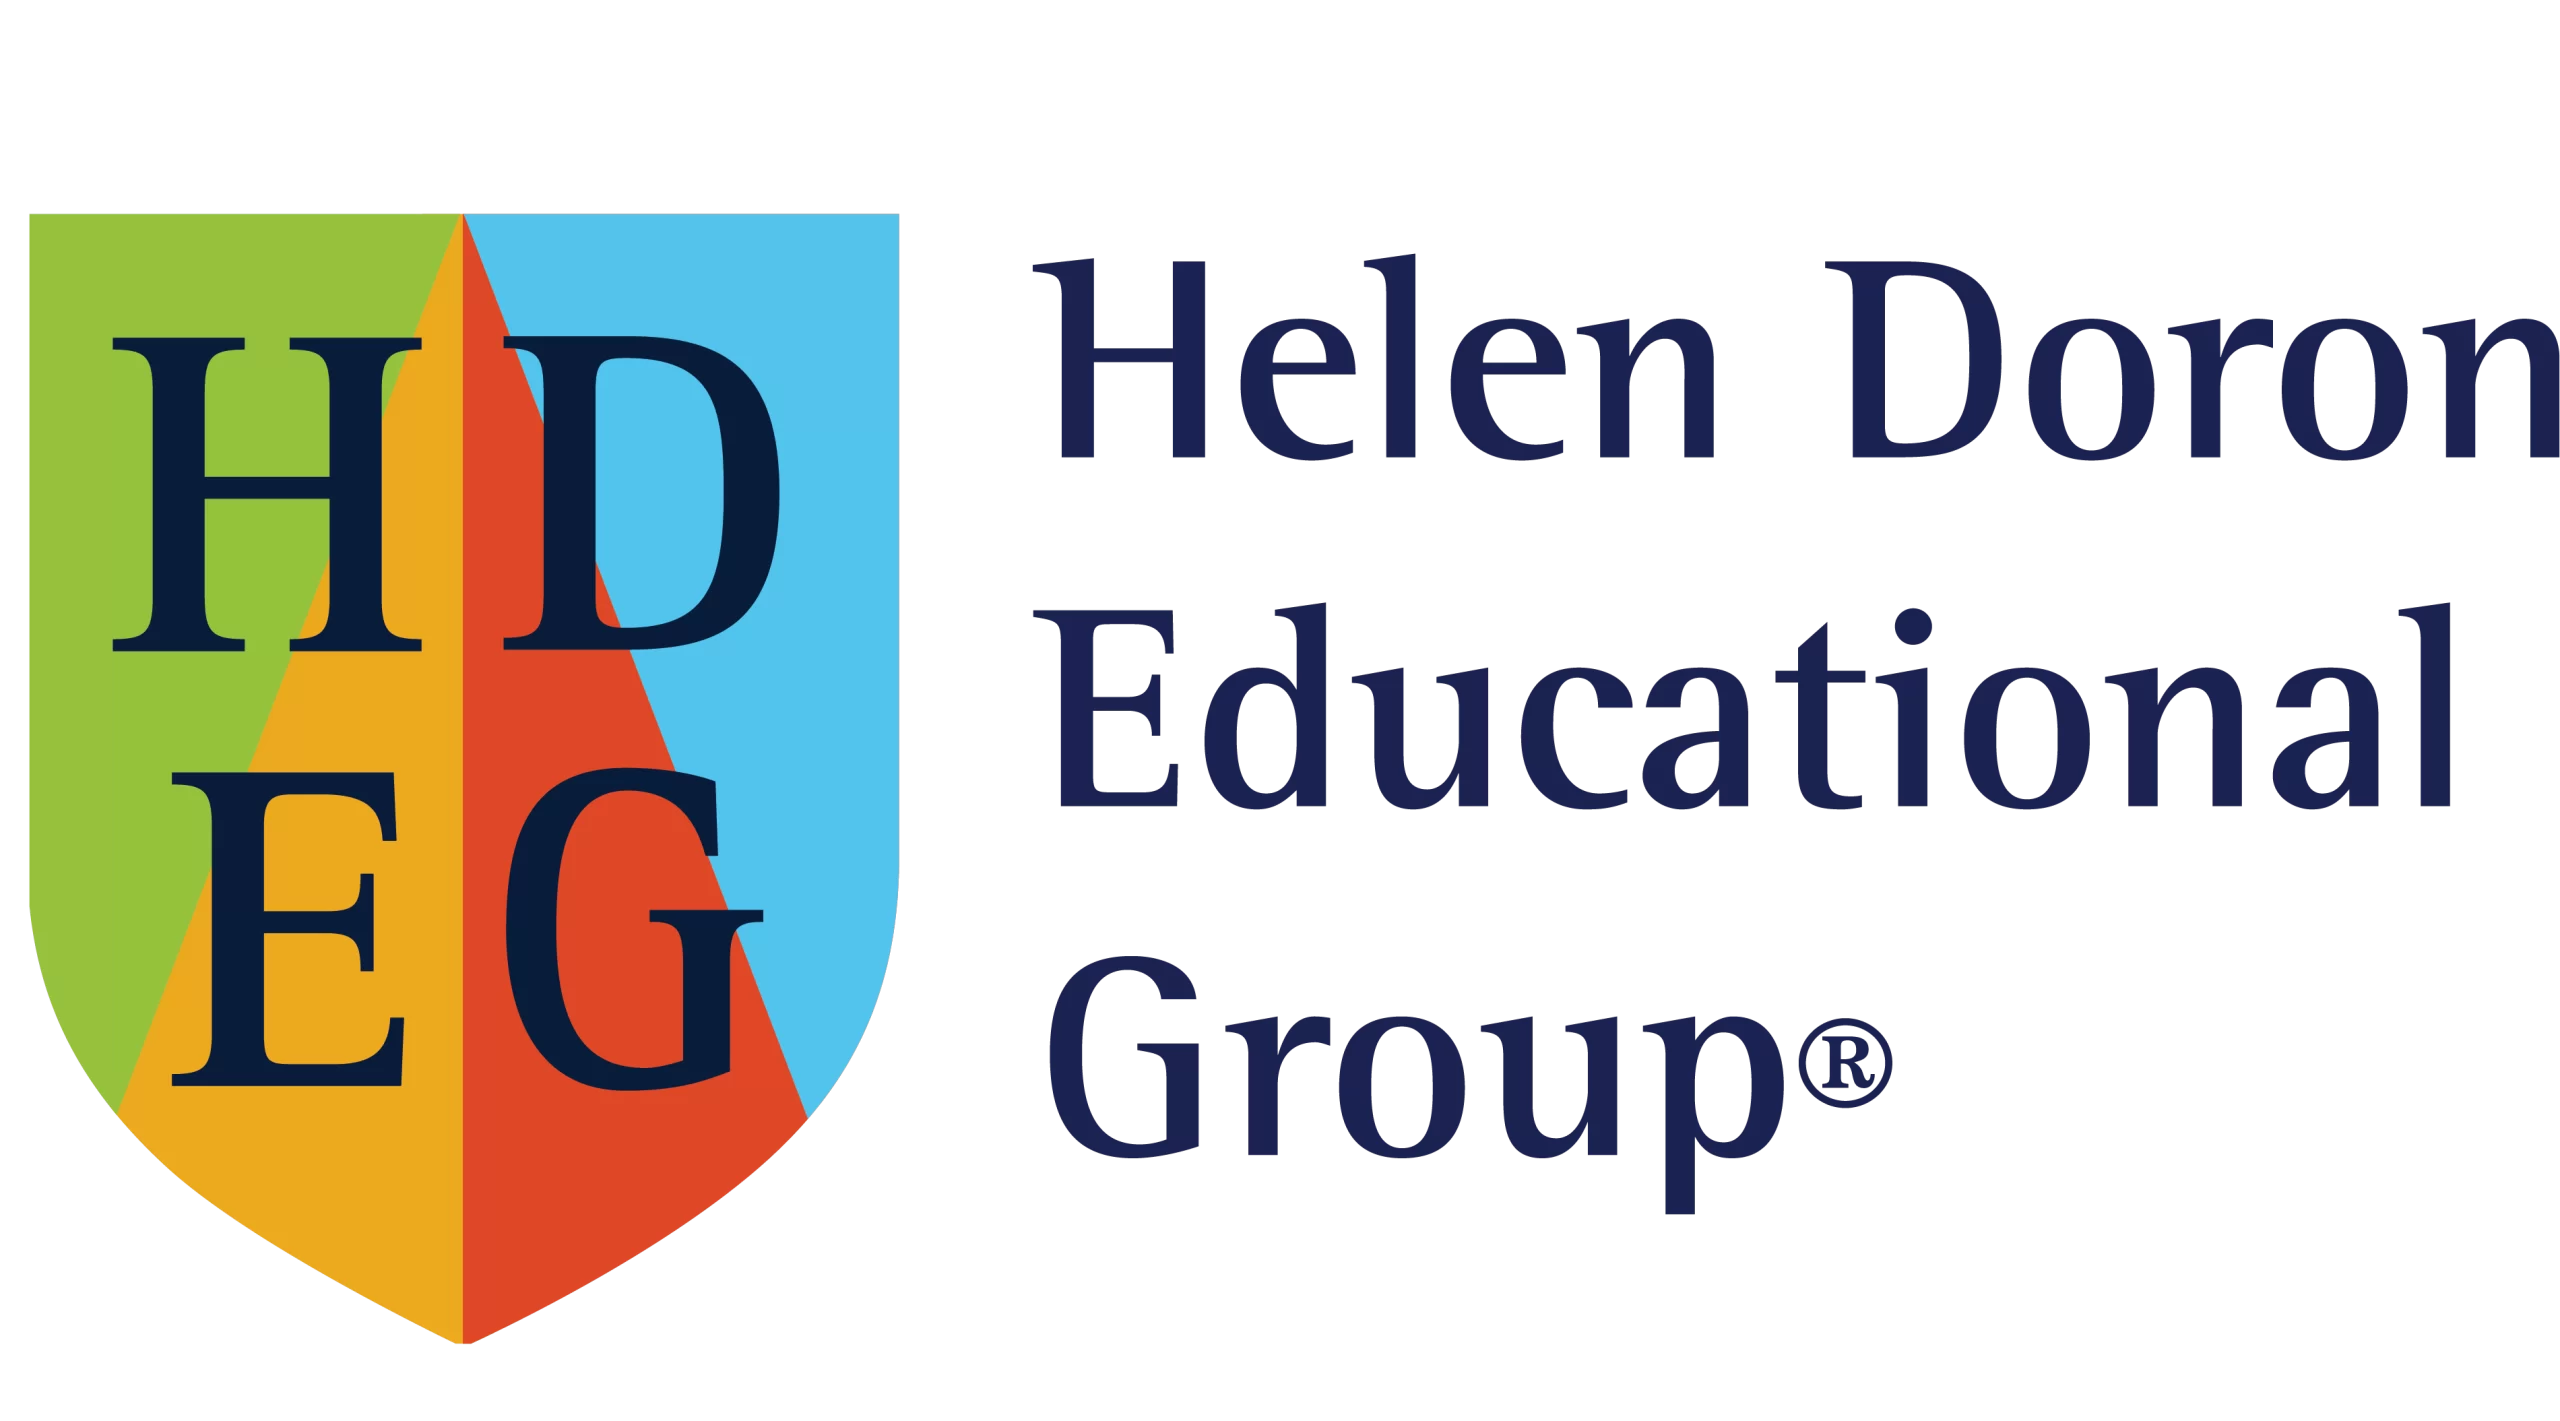 Helen Doron educational group logo